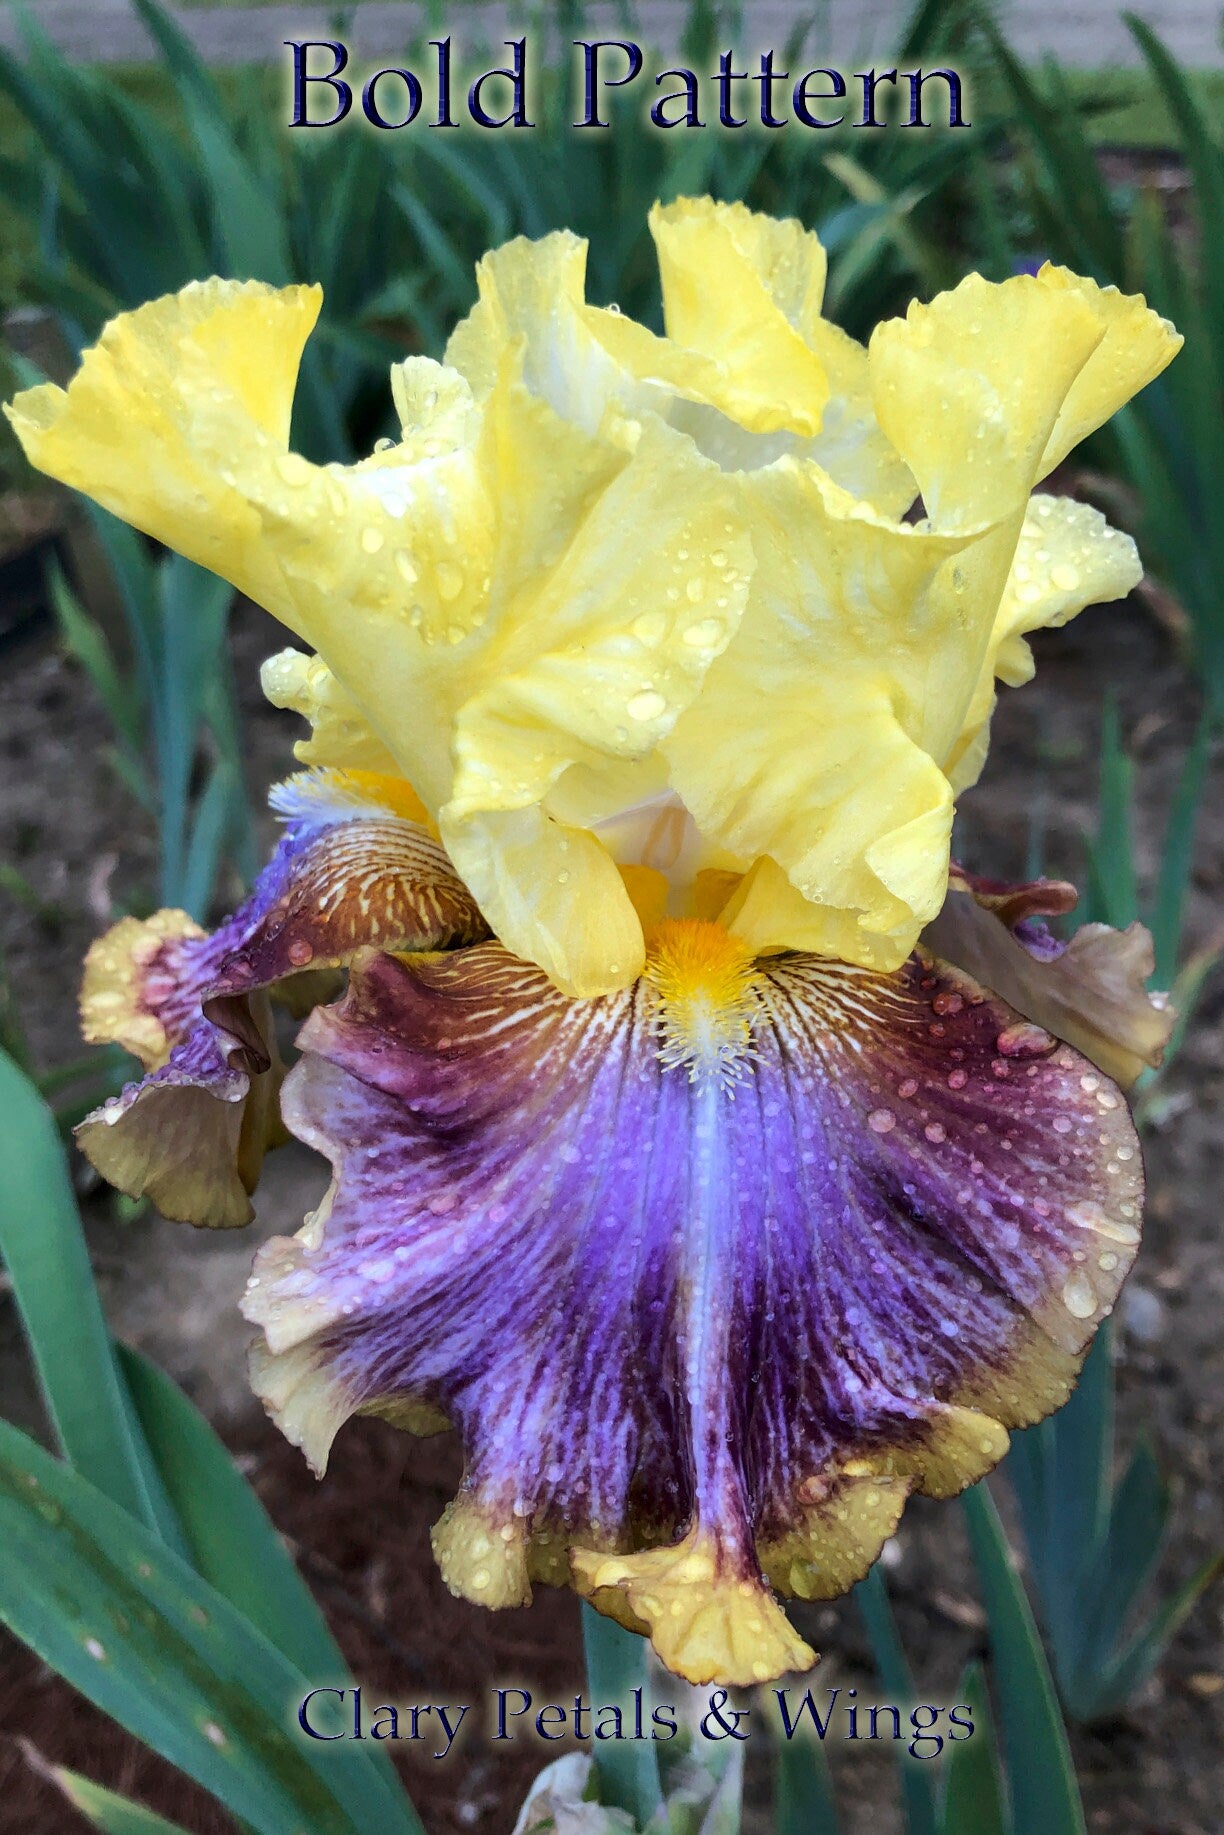 BOLD PATTERN - 2015 Tall Bearded Iris - Fragrant Huge flowers, strong stalks